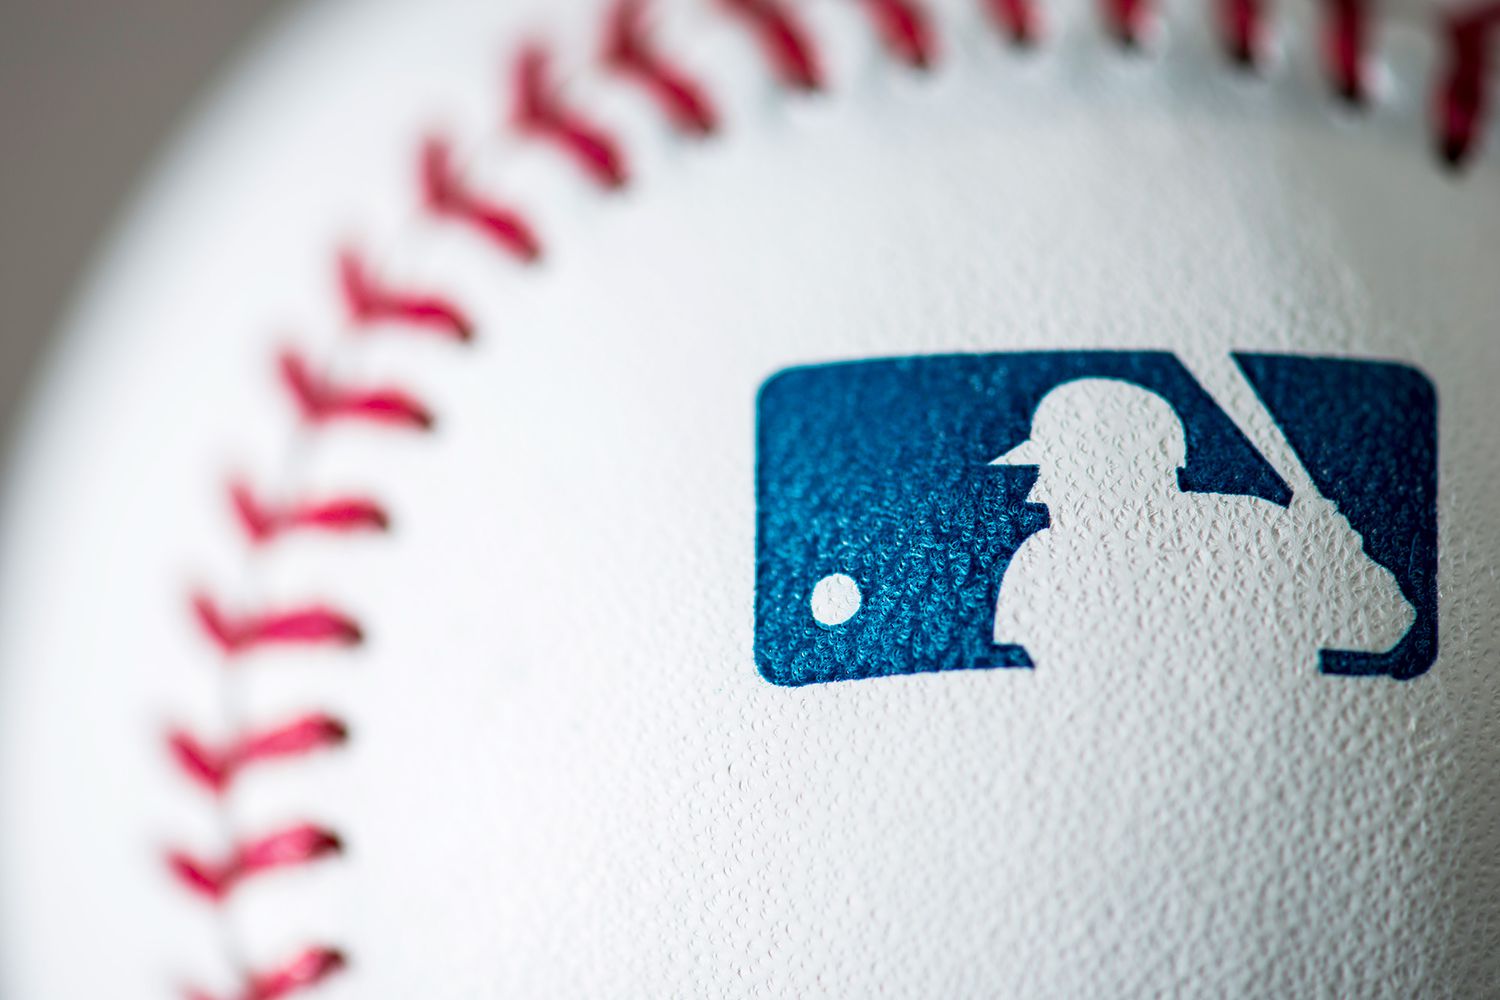 A detail view of the Major League Baseball logo on a baseball